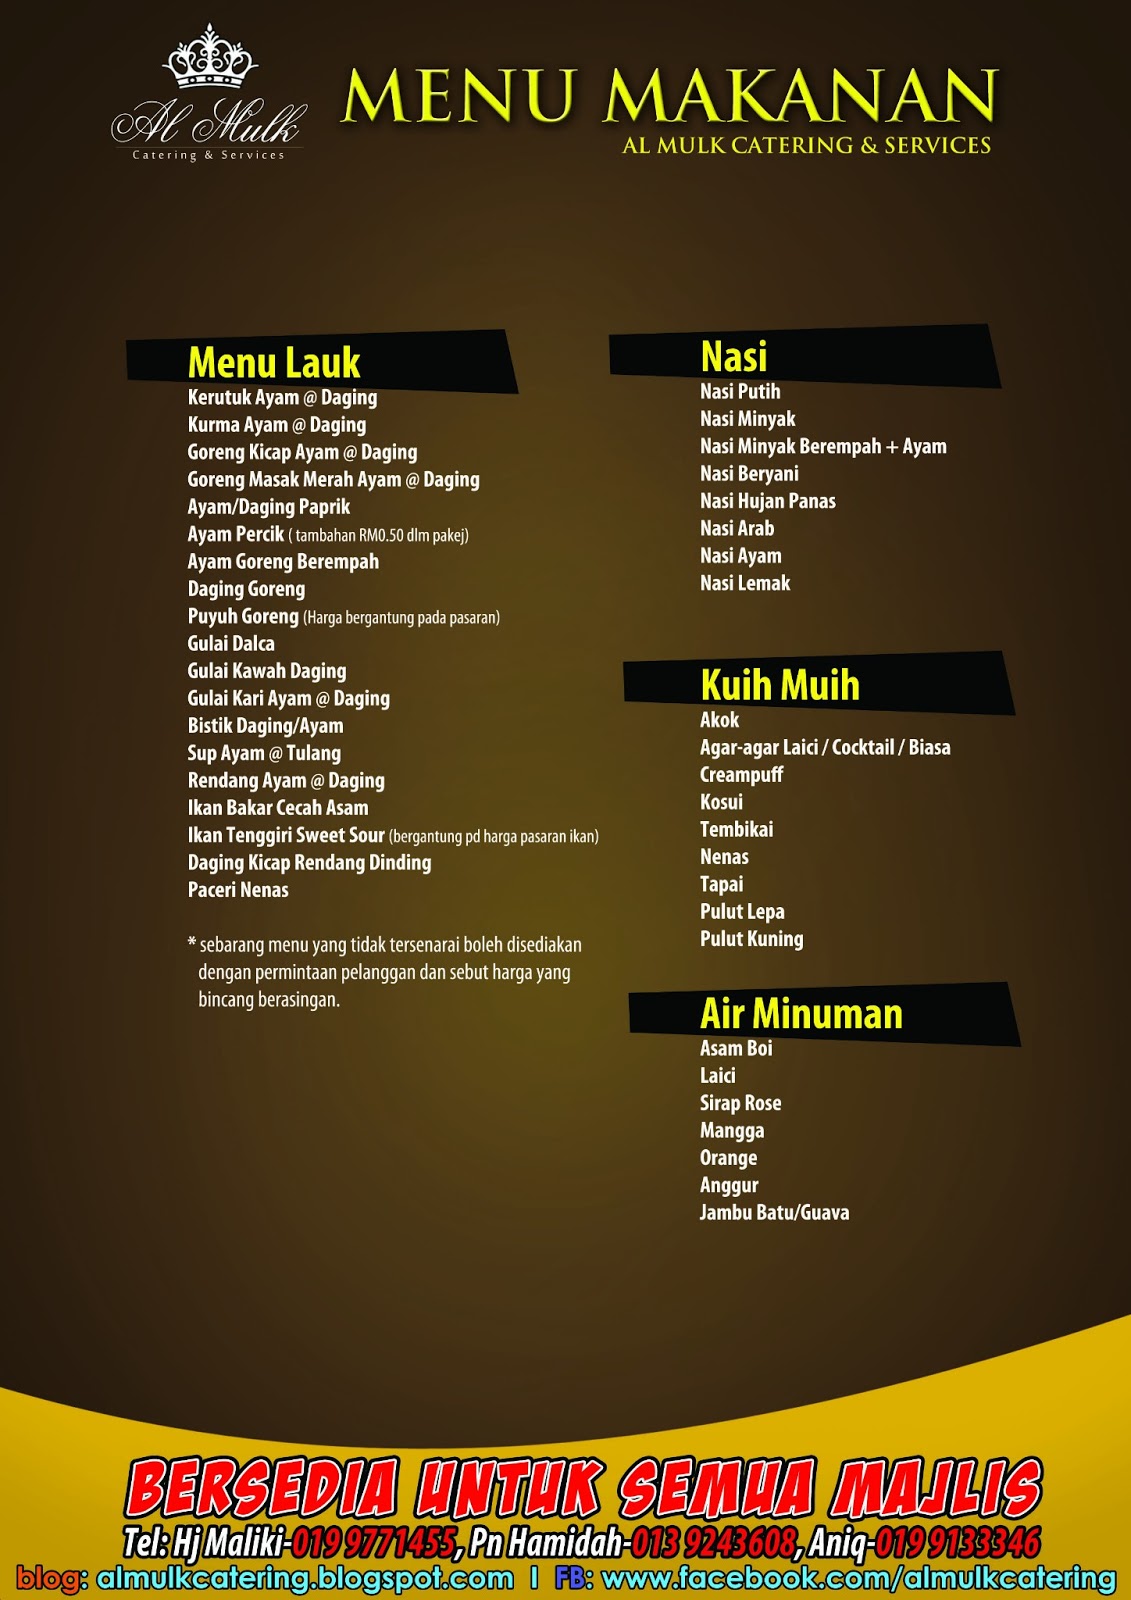 Al Mulk Catering & Services: MENU MAKANAN